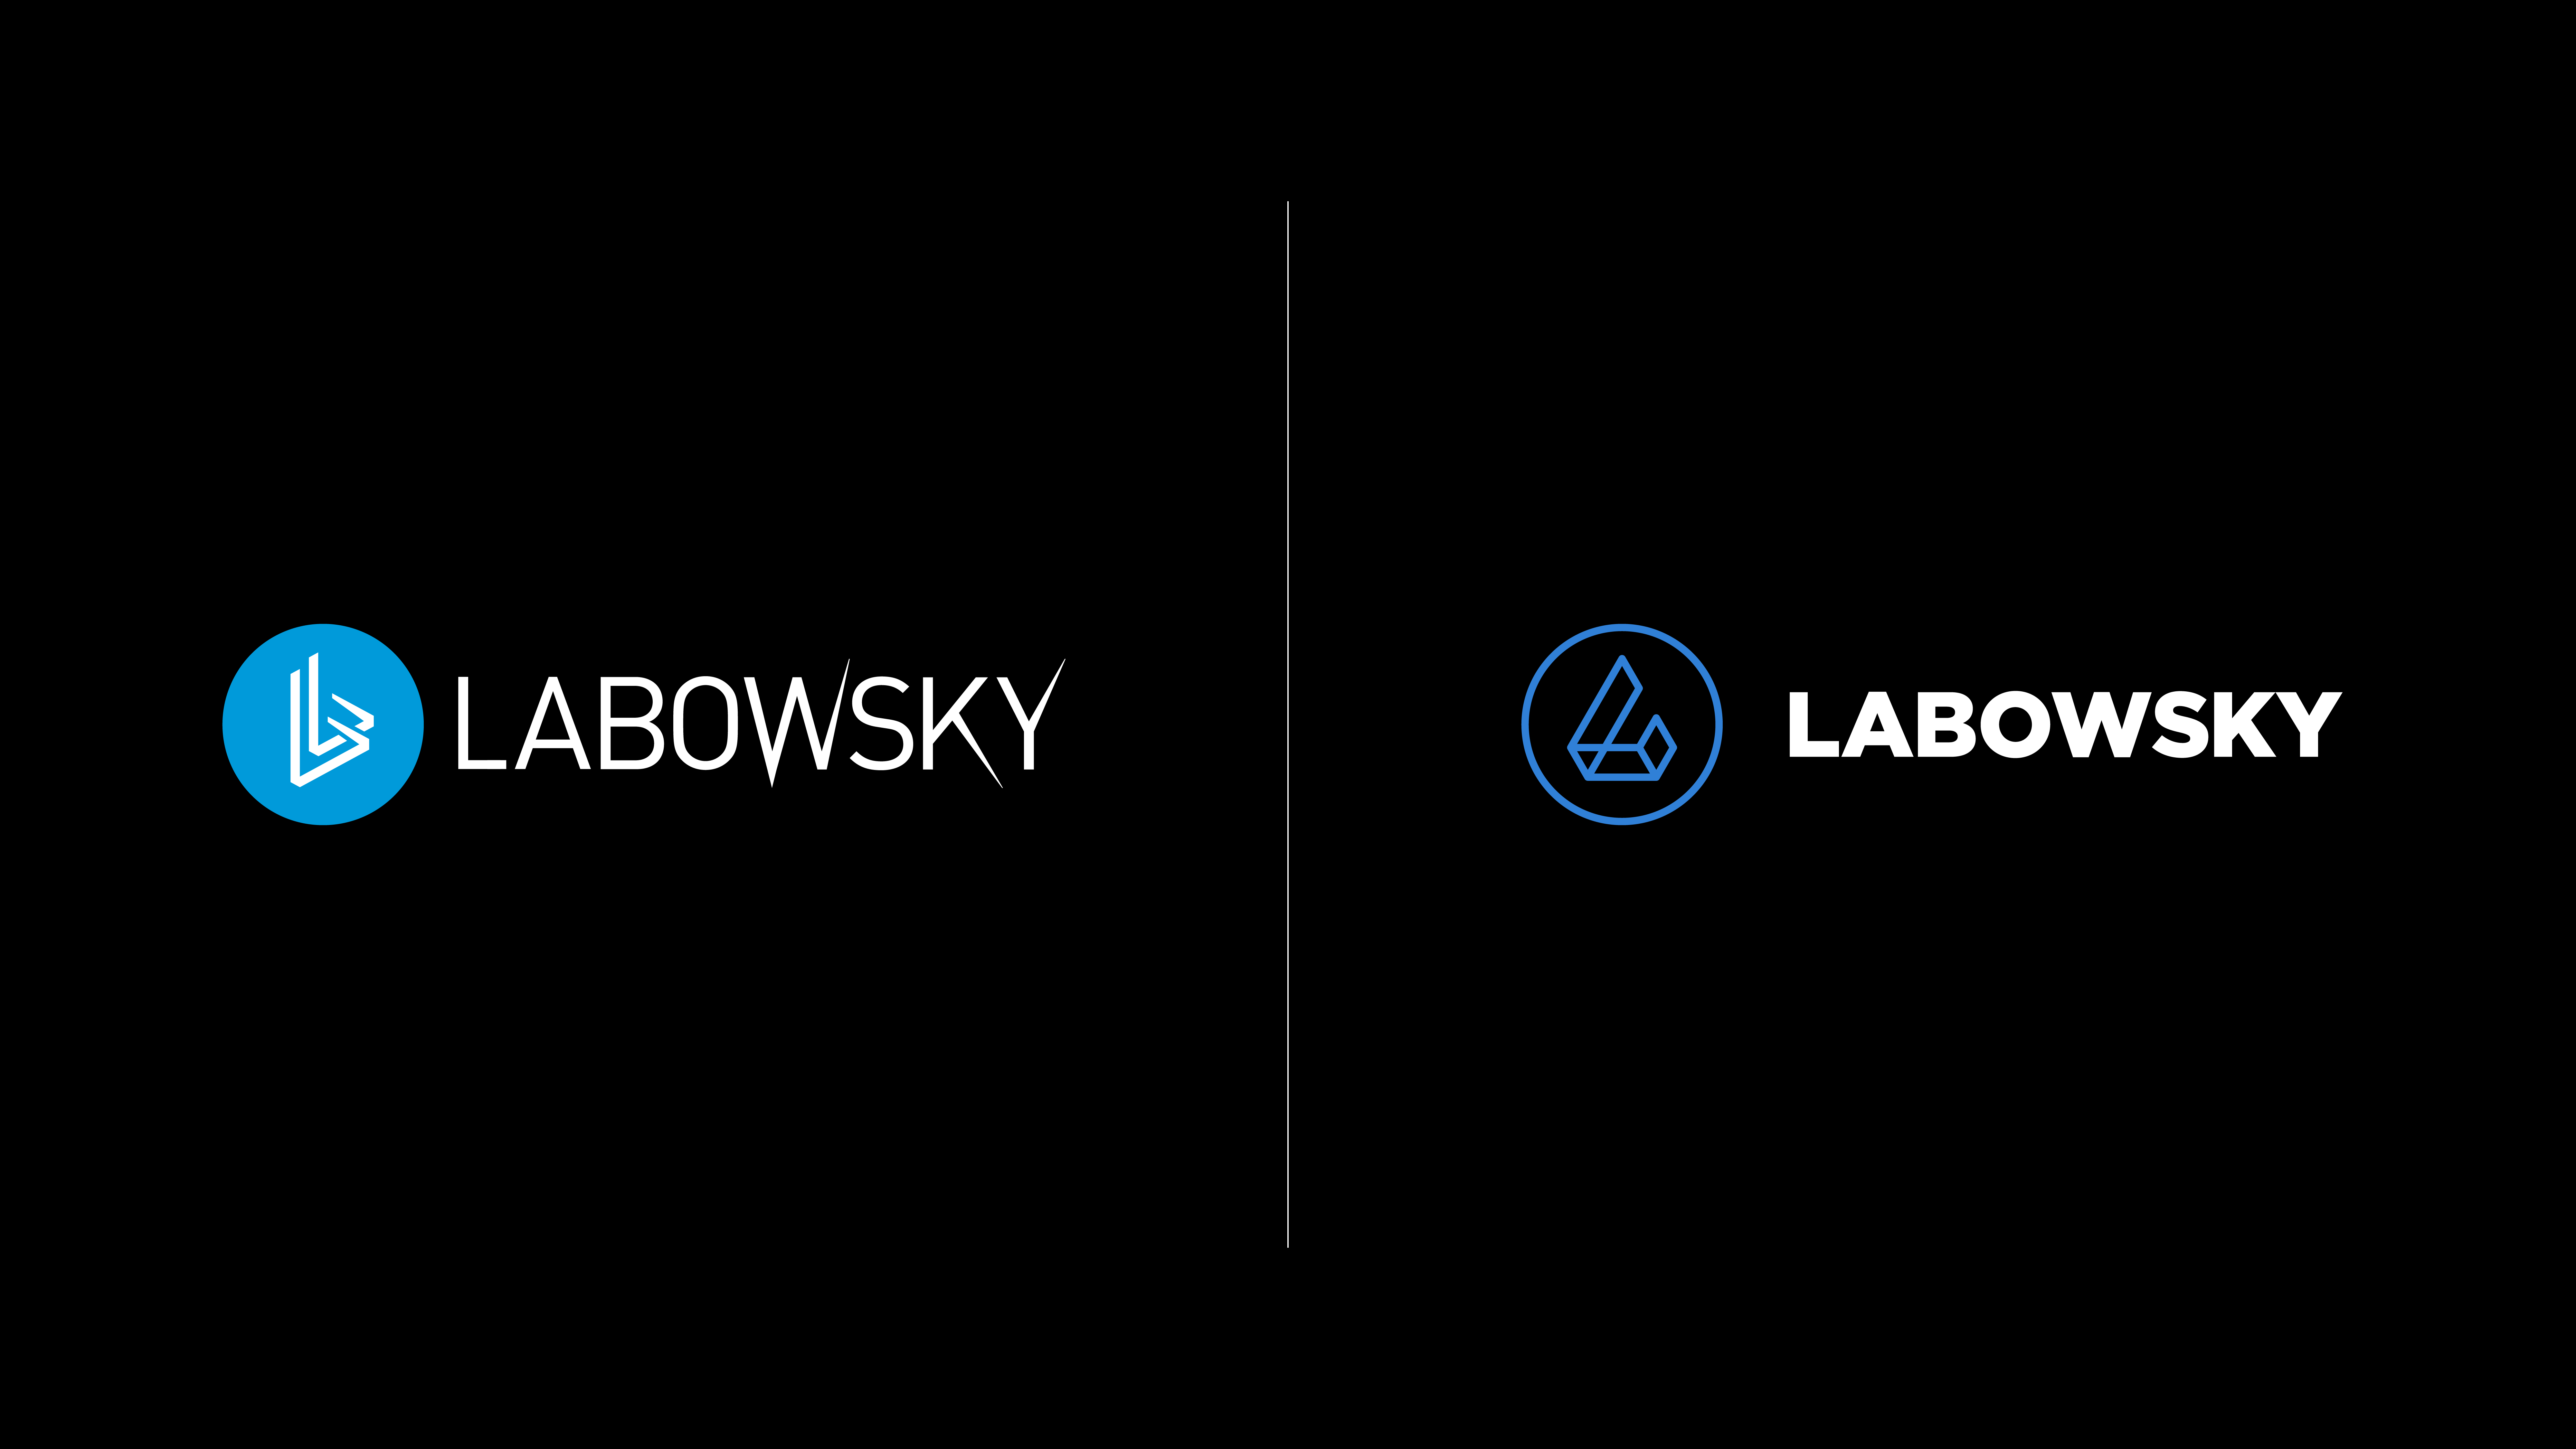 labowsky_logo_before_after_black_1